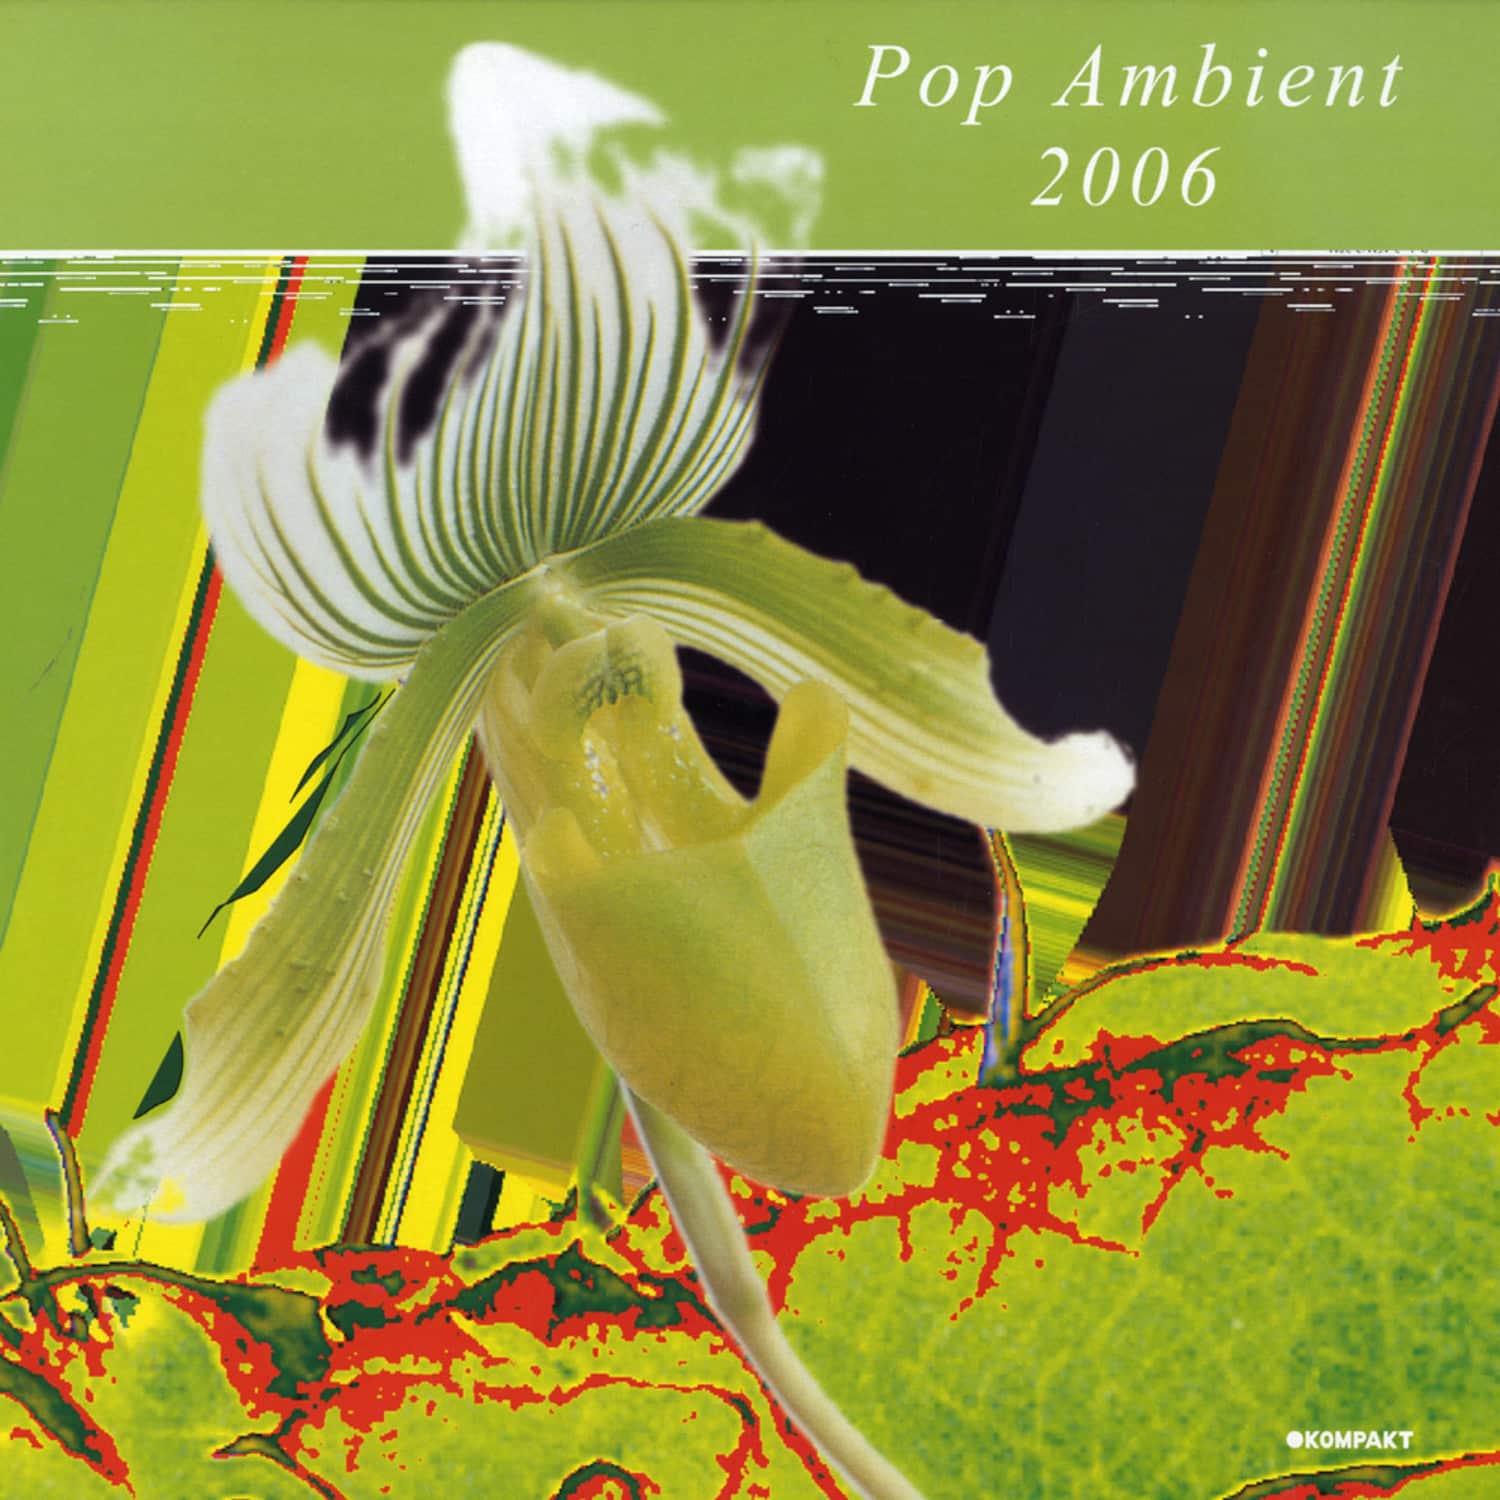 Kompakt - POP AMBIENT 2006 